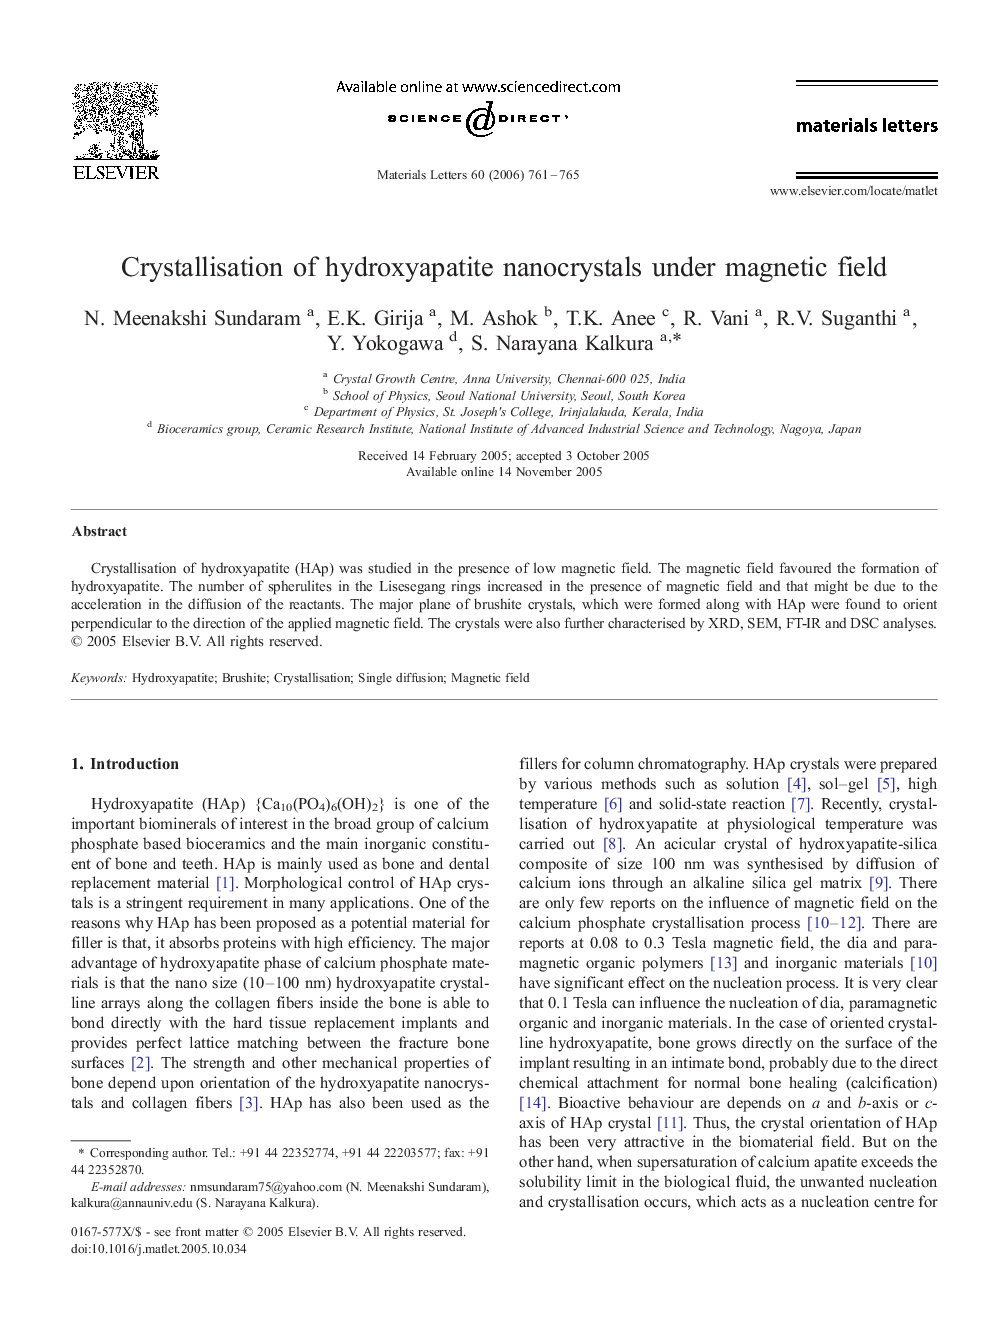 Crystallisation of hydroxyapatite nanocrystals under magnetic field